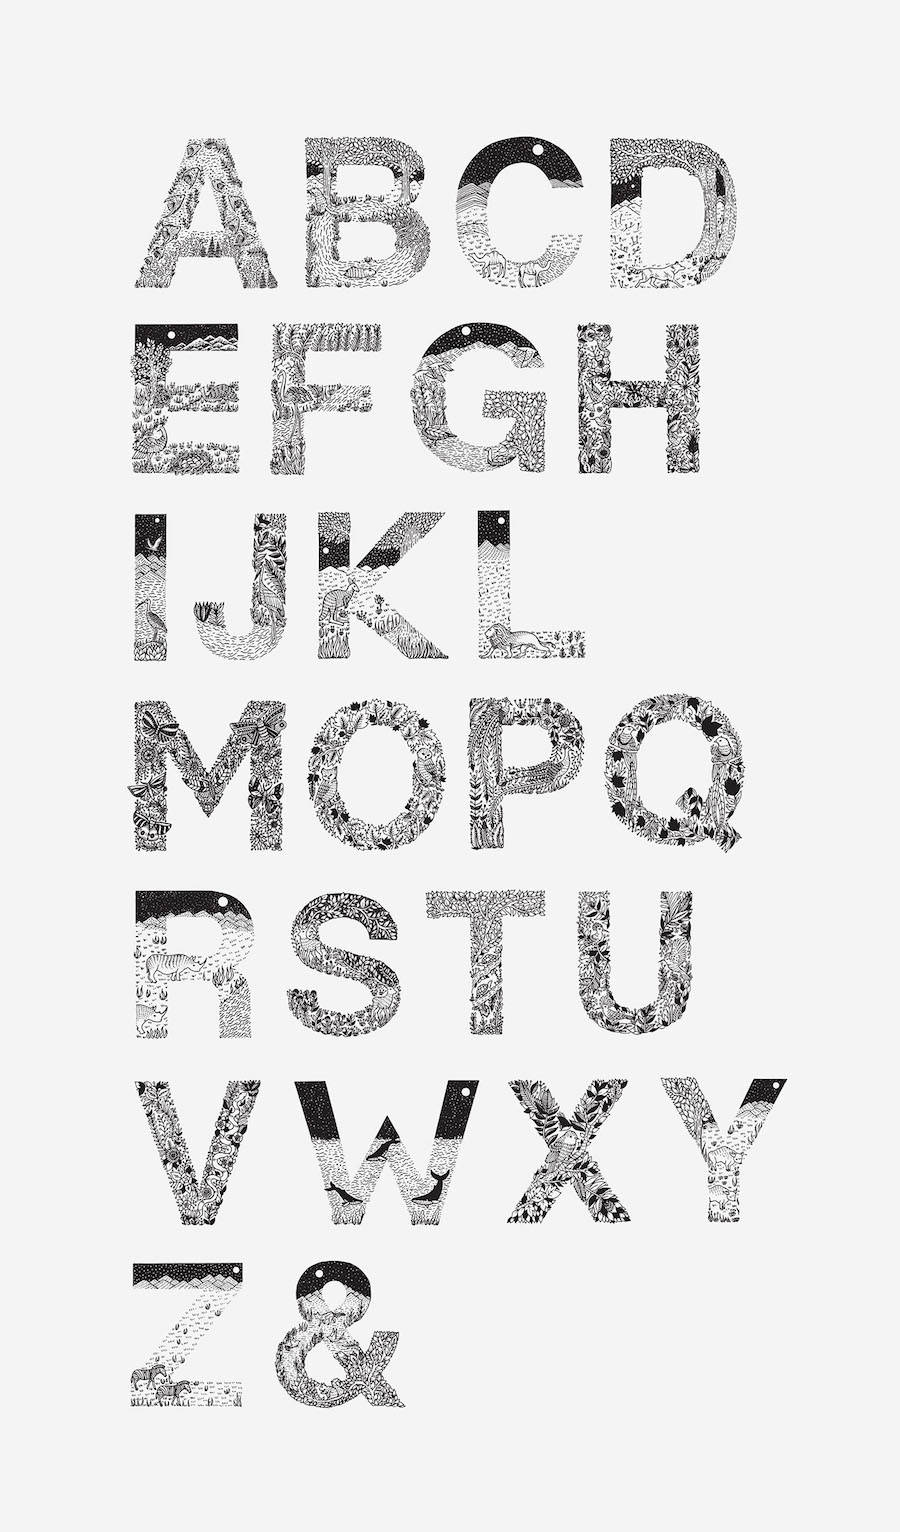 Creative-Black-and-White-Animal-Alphabet-28-900x1532.jpg